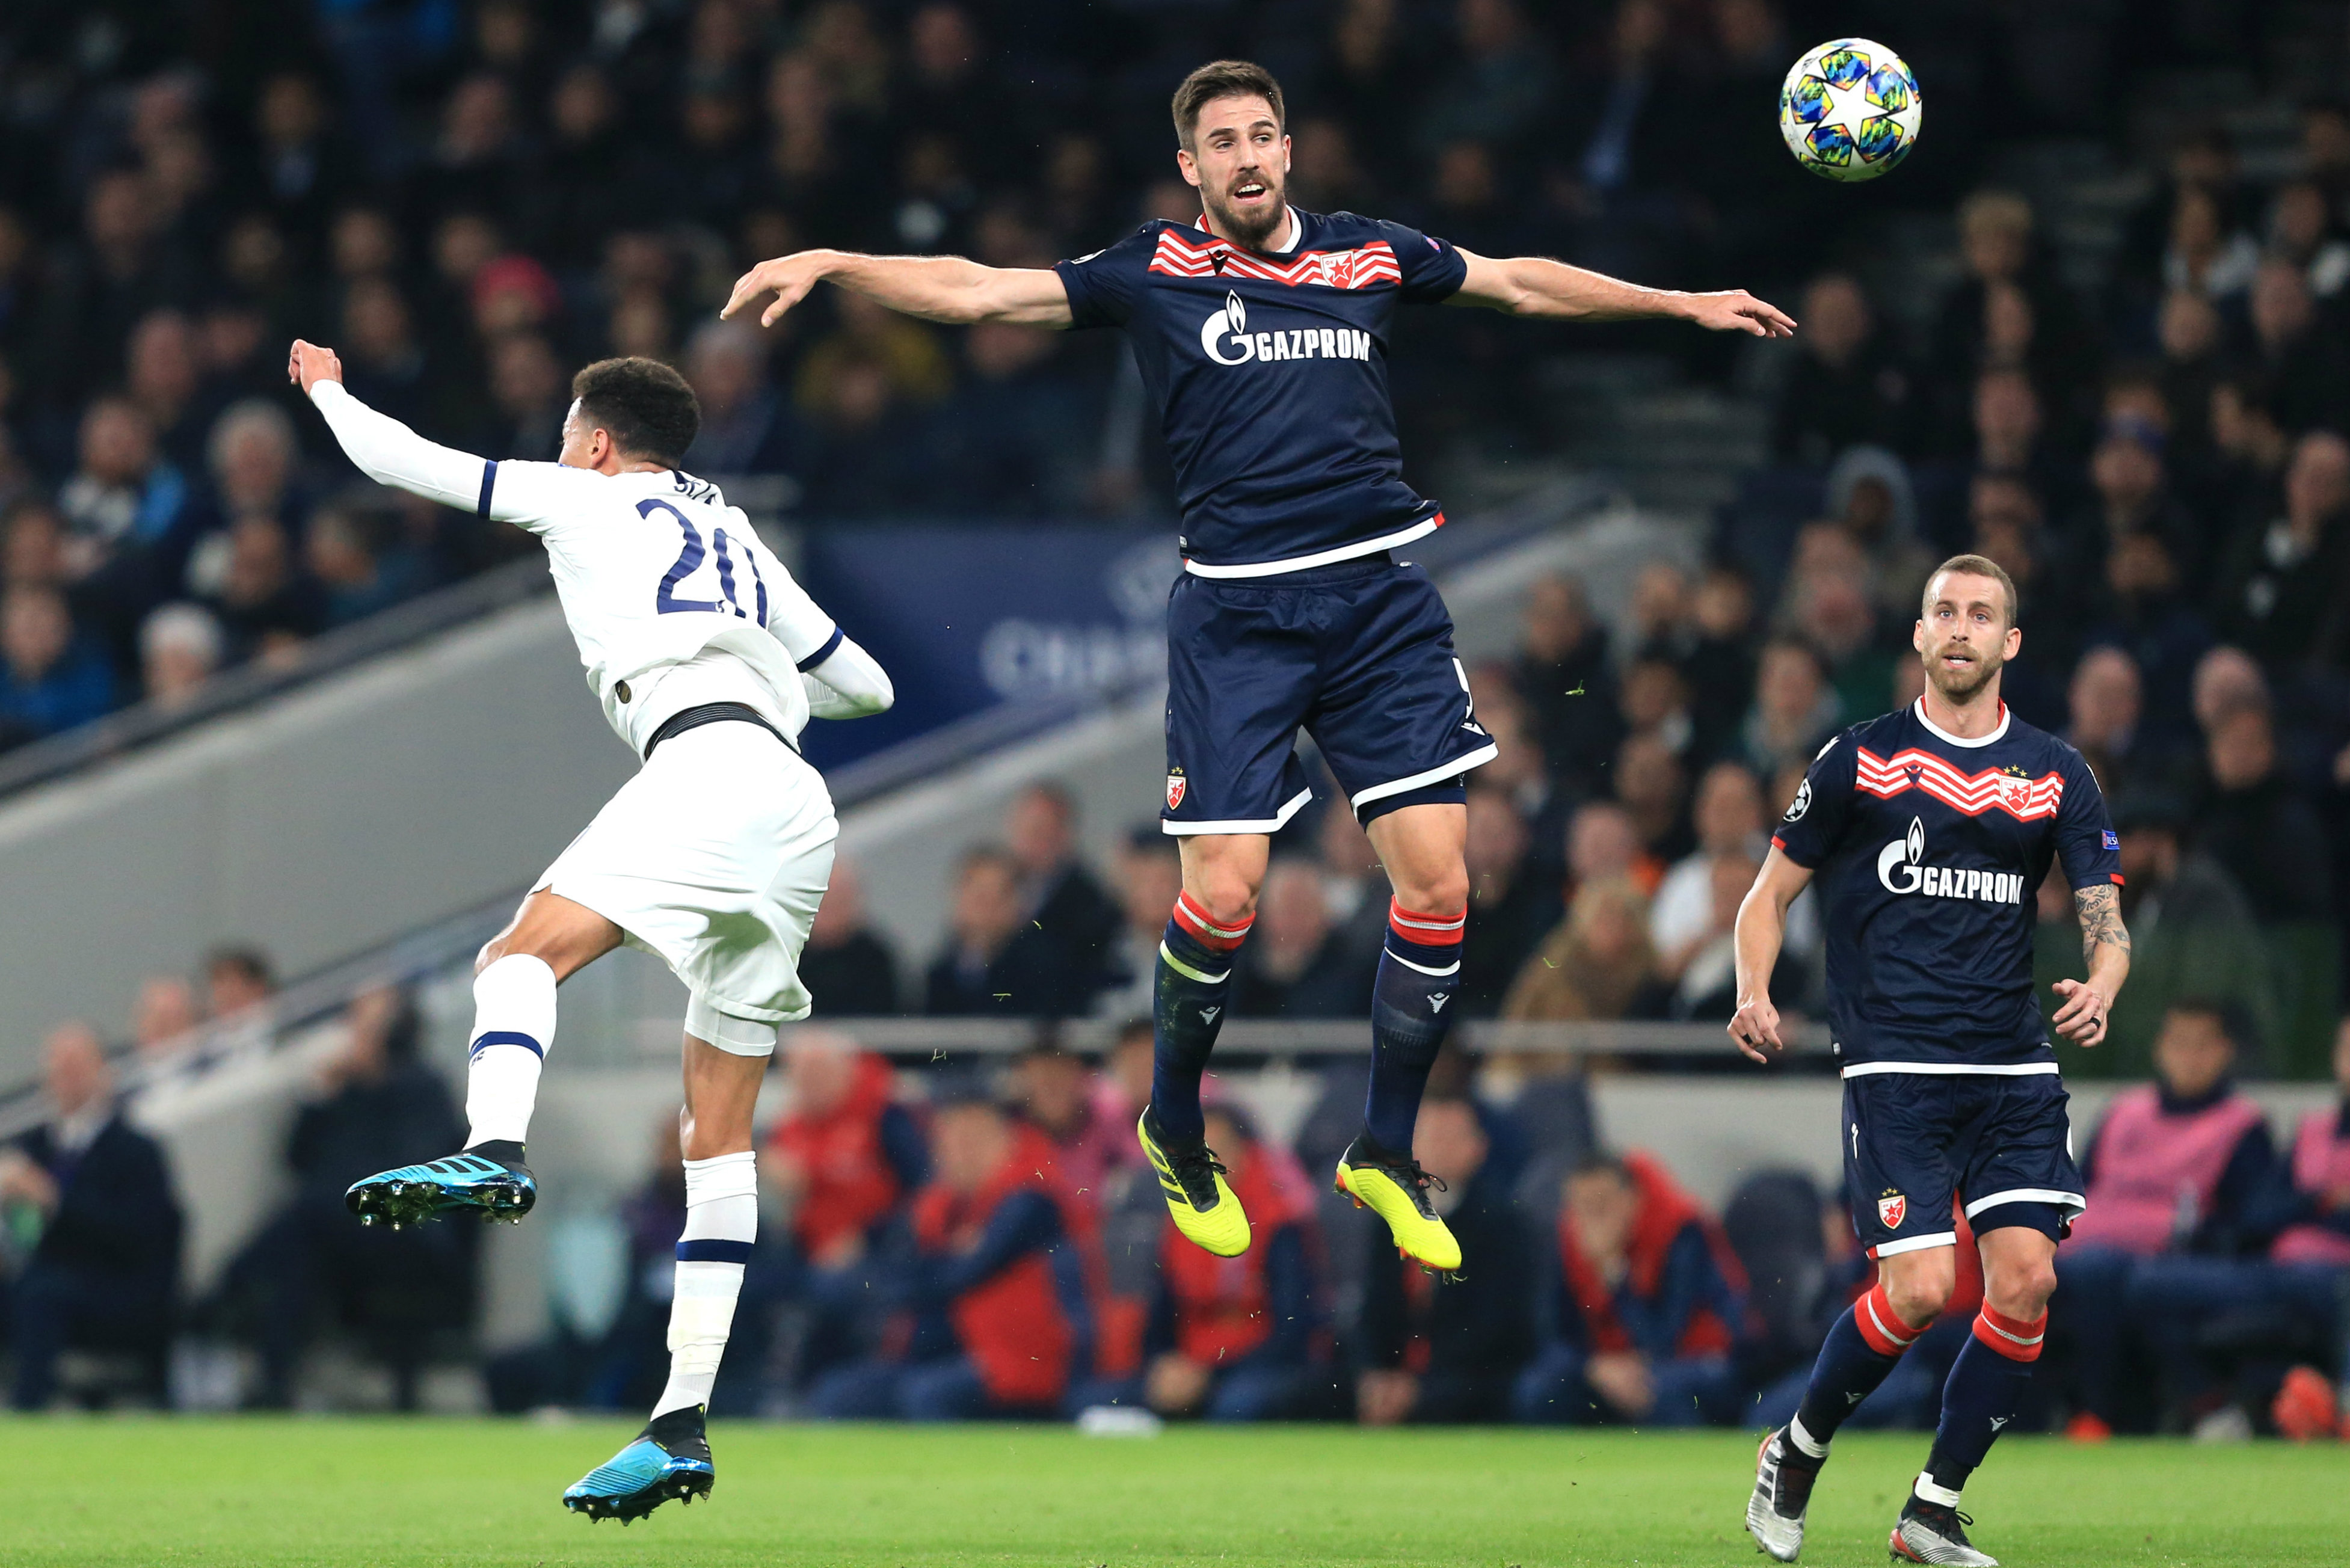 Milos Degenek challenges for a header with Tottenham's Dele Alli